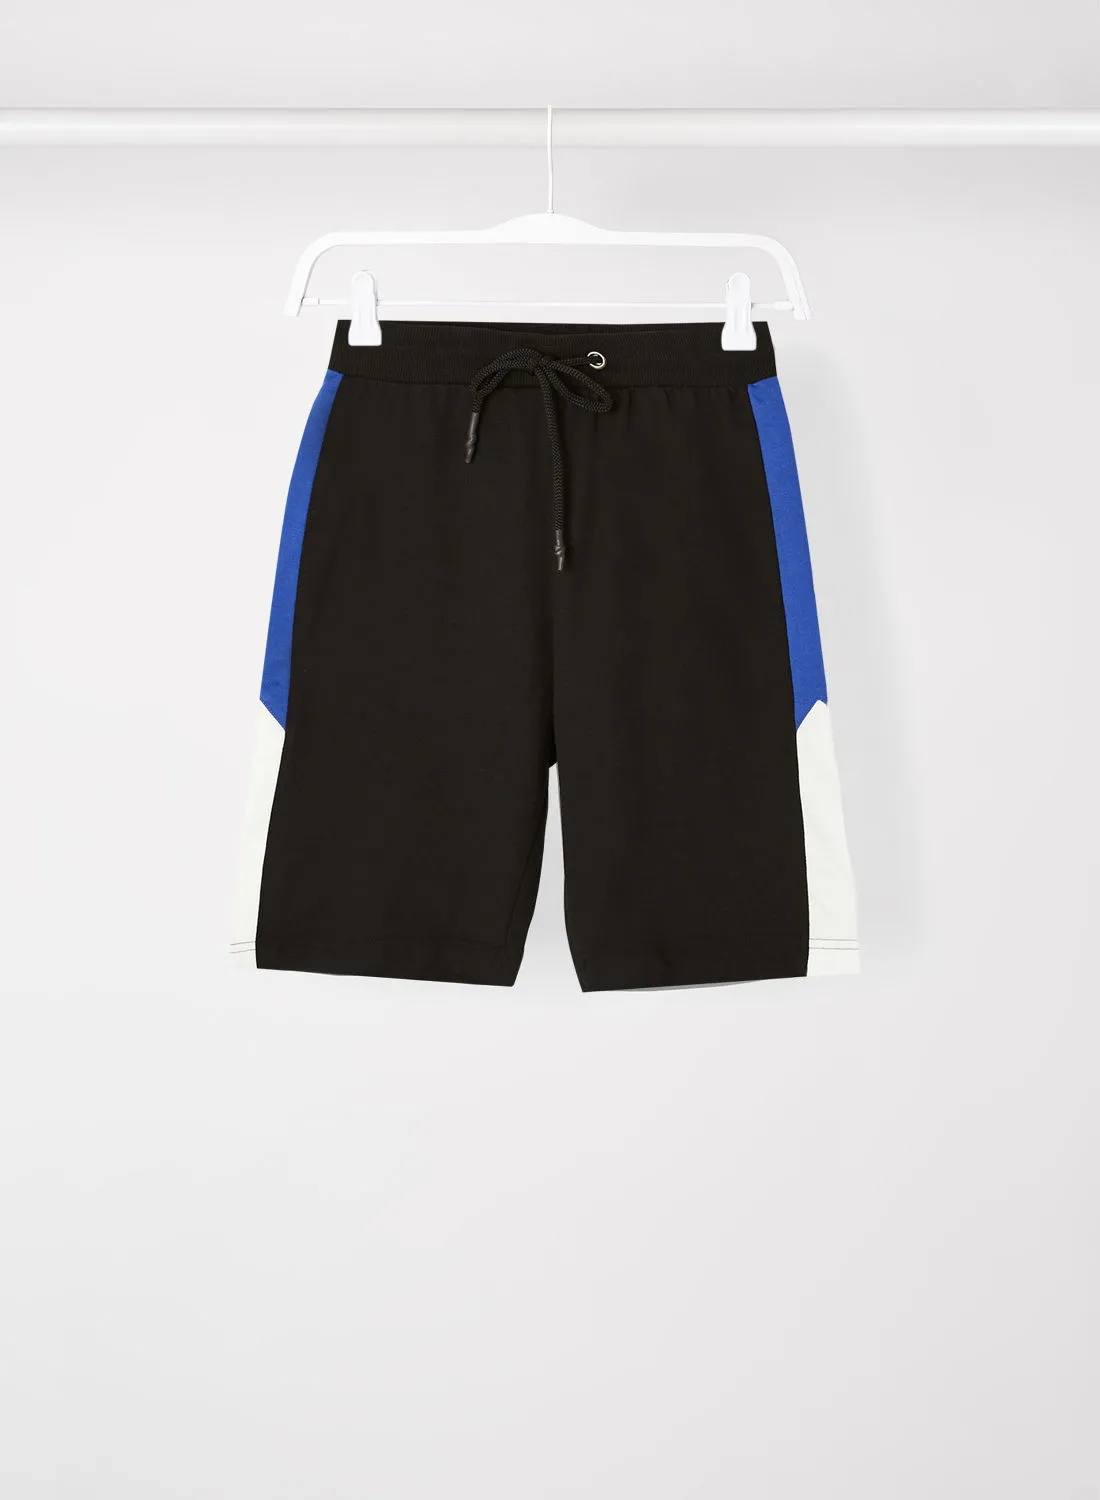 ABOF Contrast Stripe Detail Elastic Waistband Drawstring Shorts Black/Blue/White